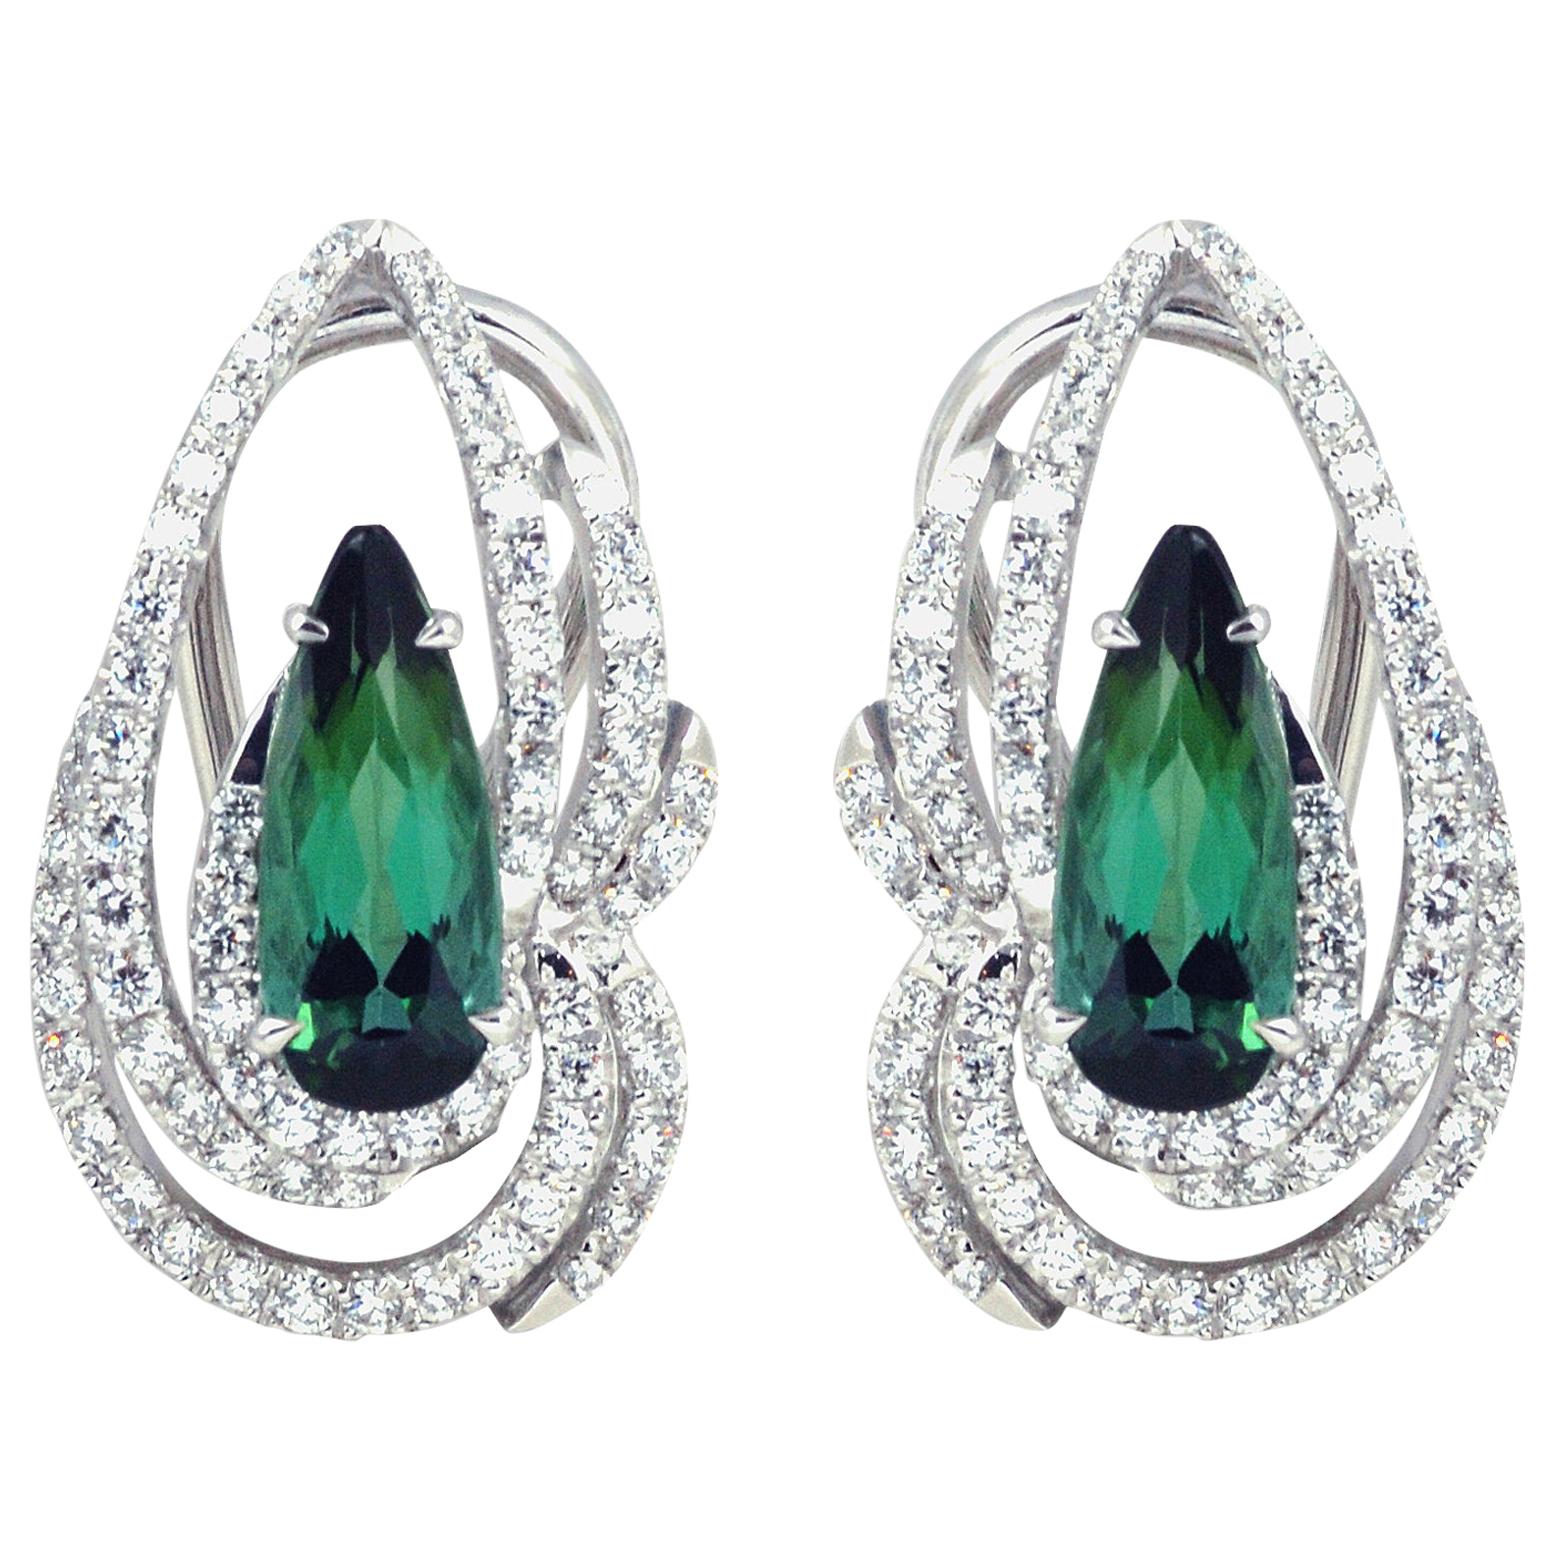 Green Tourmaline 2.92 Carat, Diamond 0.96 ct Earrings in 18k White Gold Settings